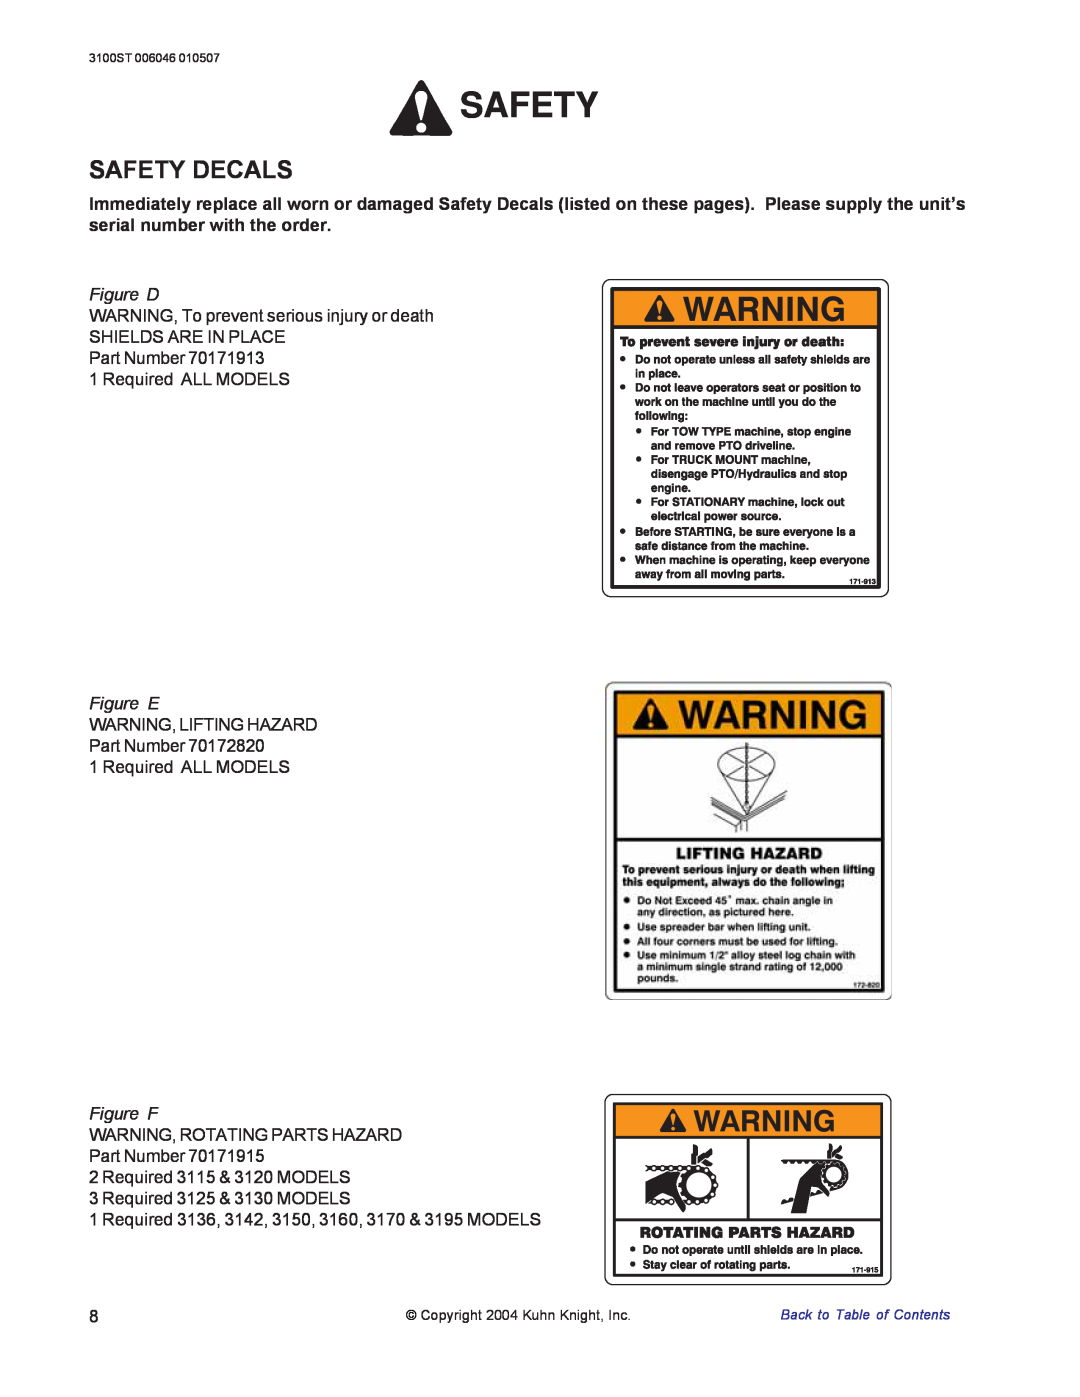 Kuhn Rikon 3100 instruction manual Safety Decals, Figure D, Figure E, Figure F 